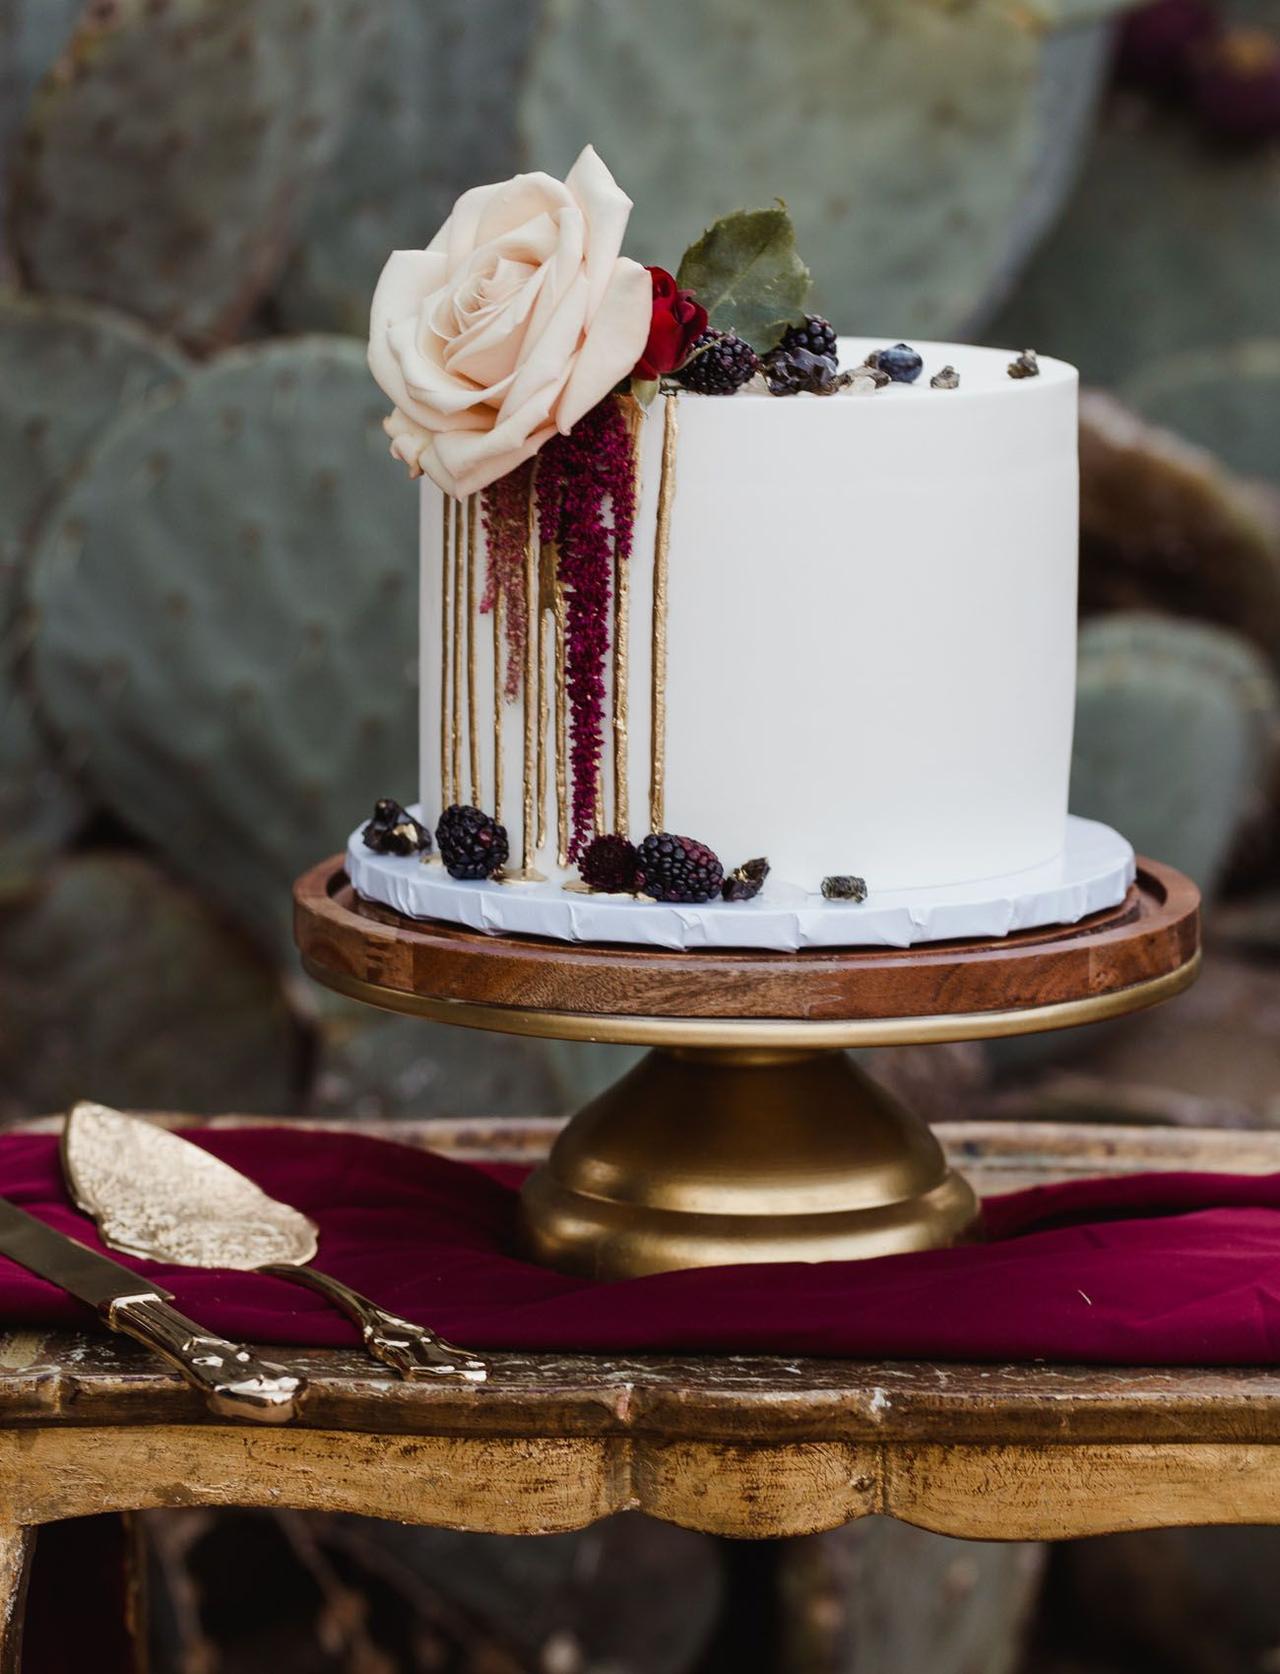 Buttercream cakes | Tiny cakes, Cake desserts, Mini cakes